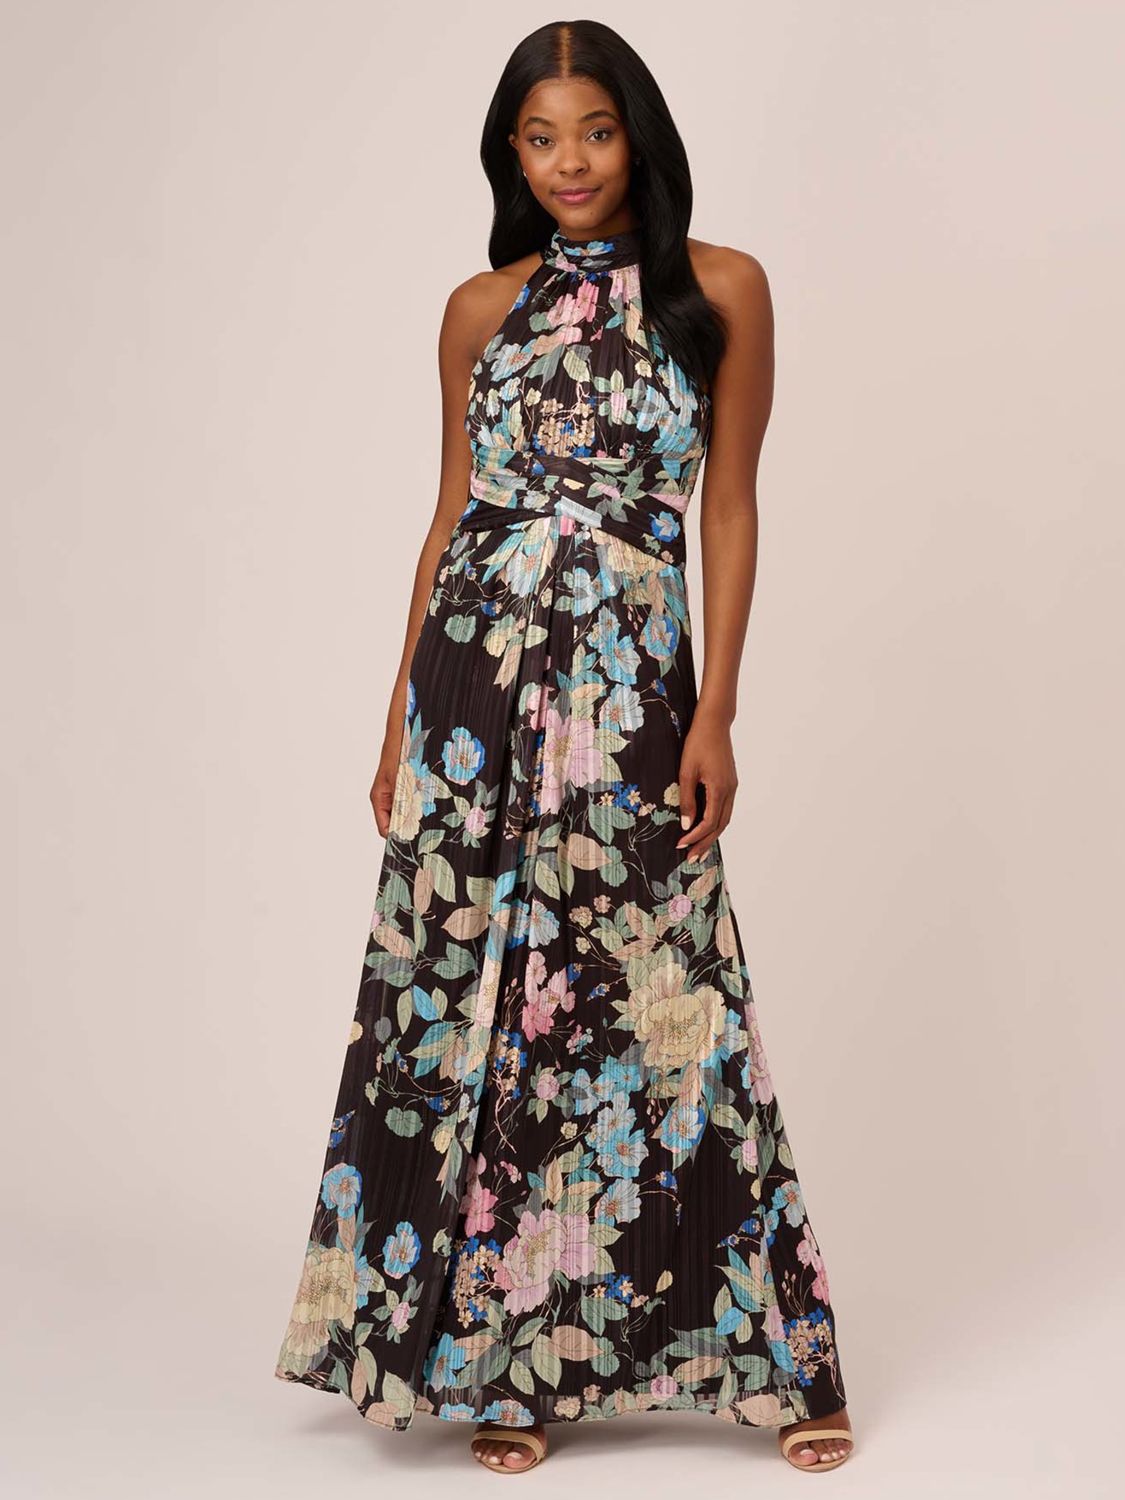 Rhinestone Flower Strapless Maxi Dress Black - Luxe Maxi Dresses